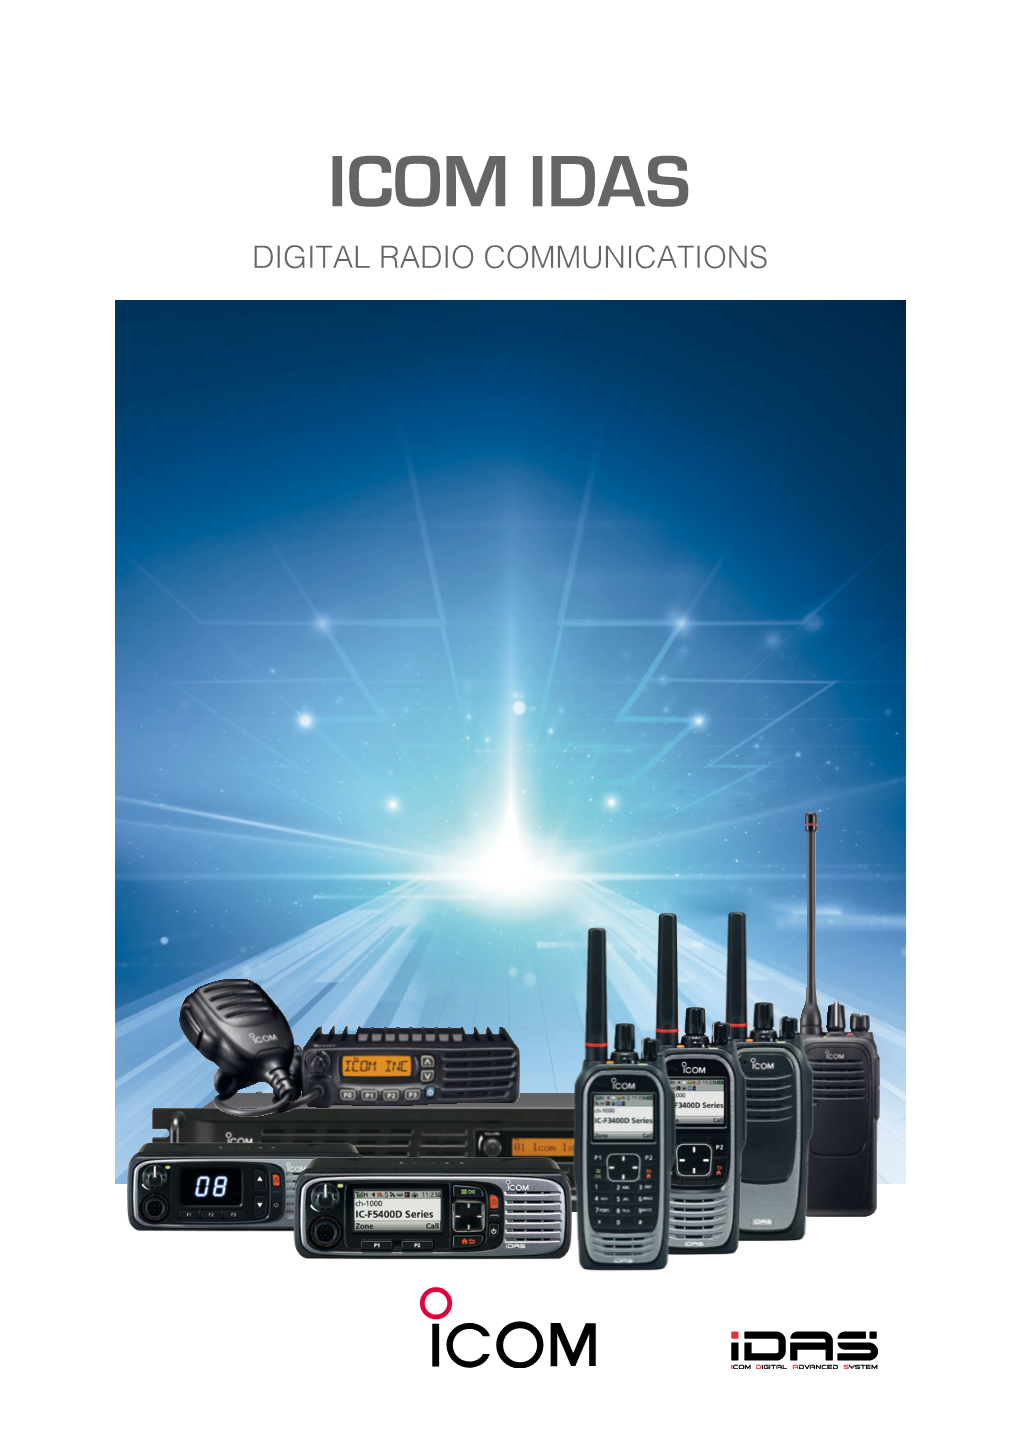 Icom Idas Digital Radio Communications Icom Uk Ltd Icom